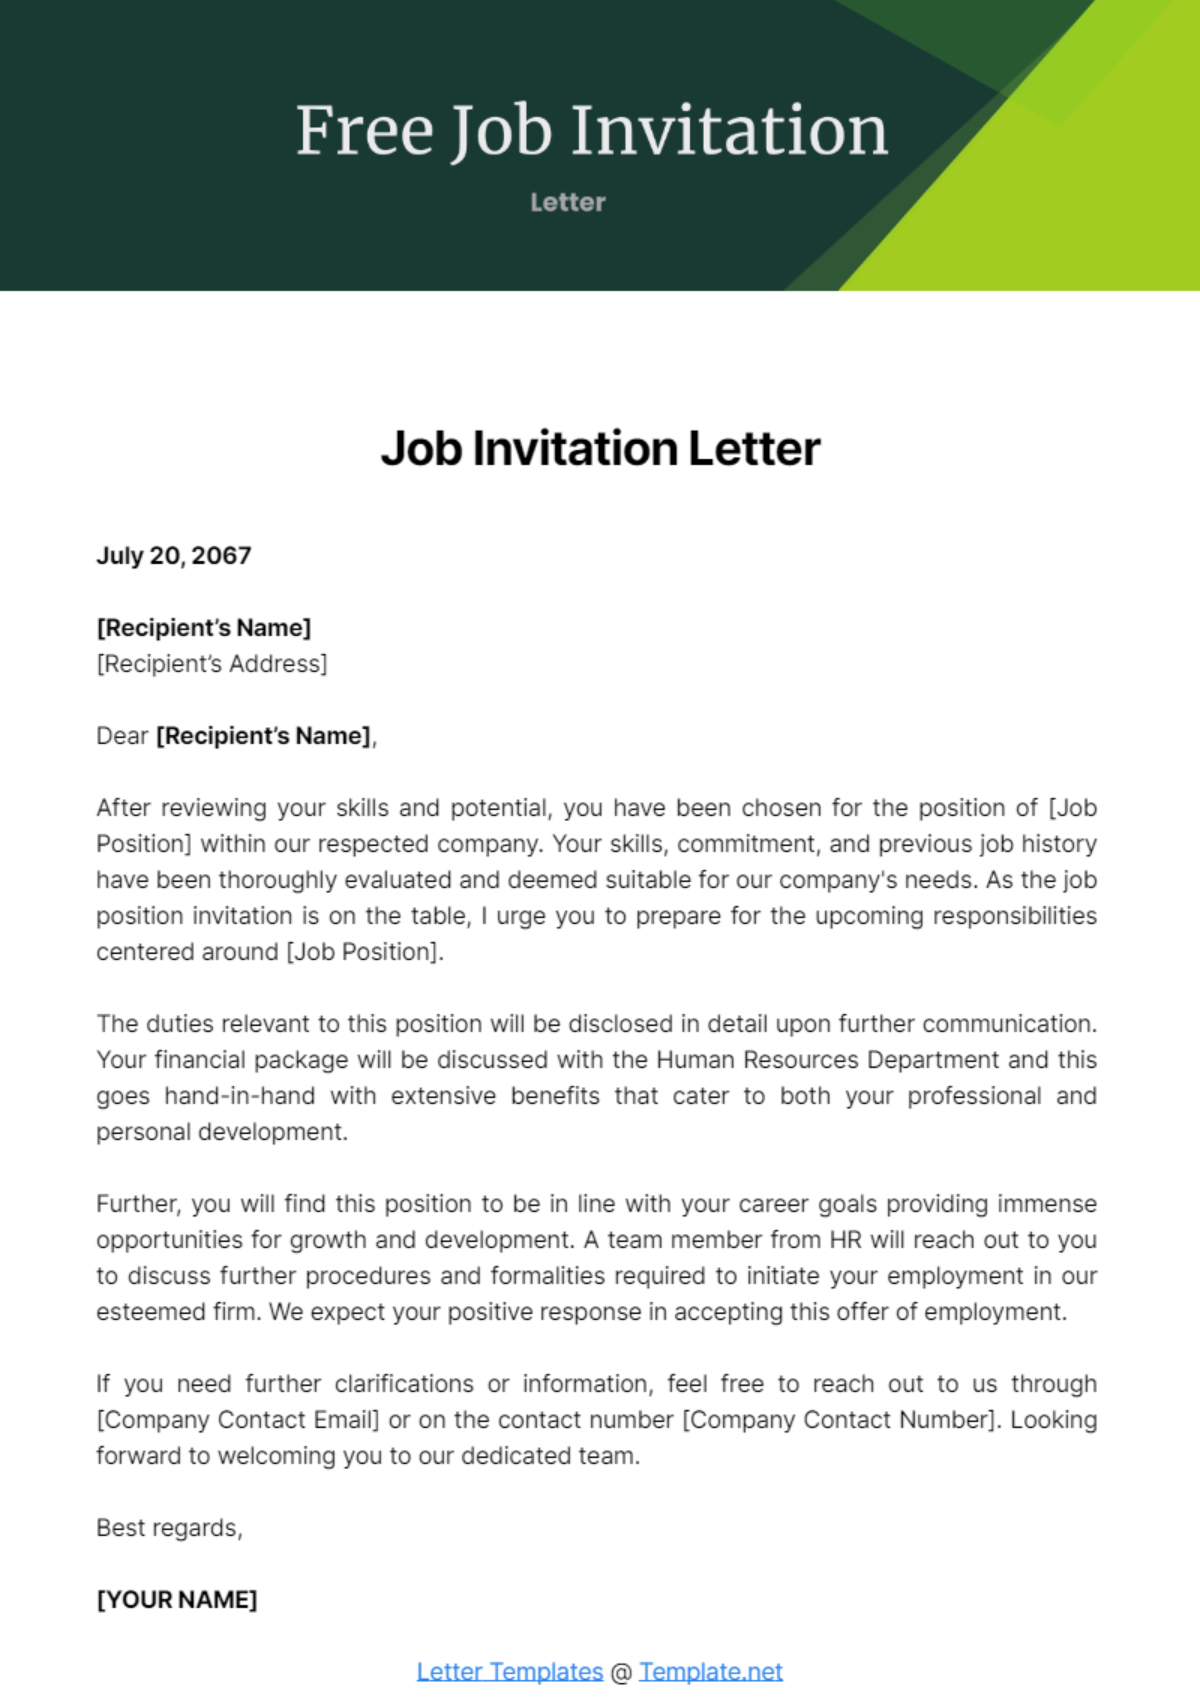 Job Invitation Letter Template